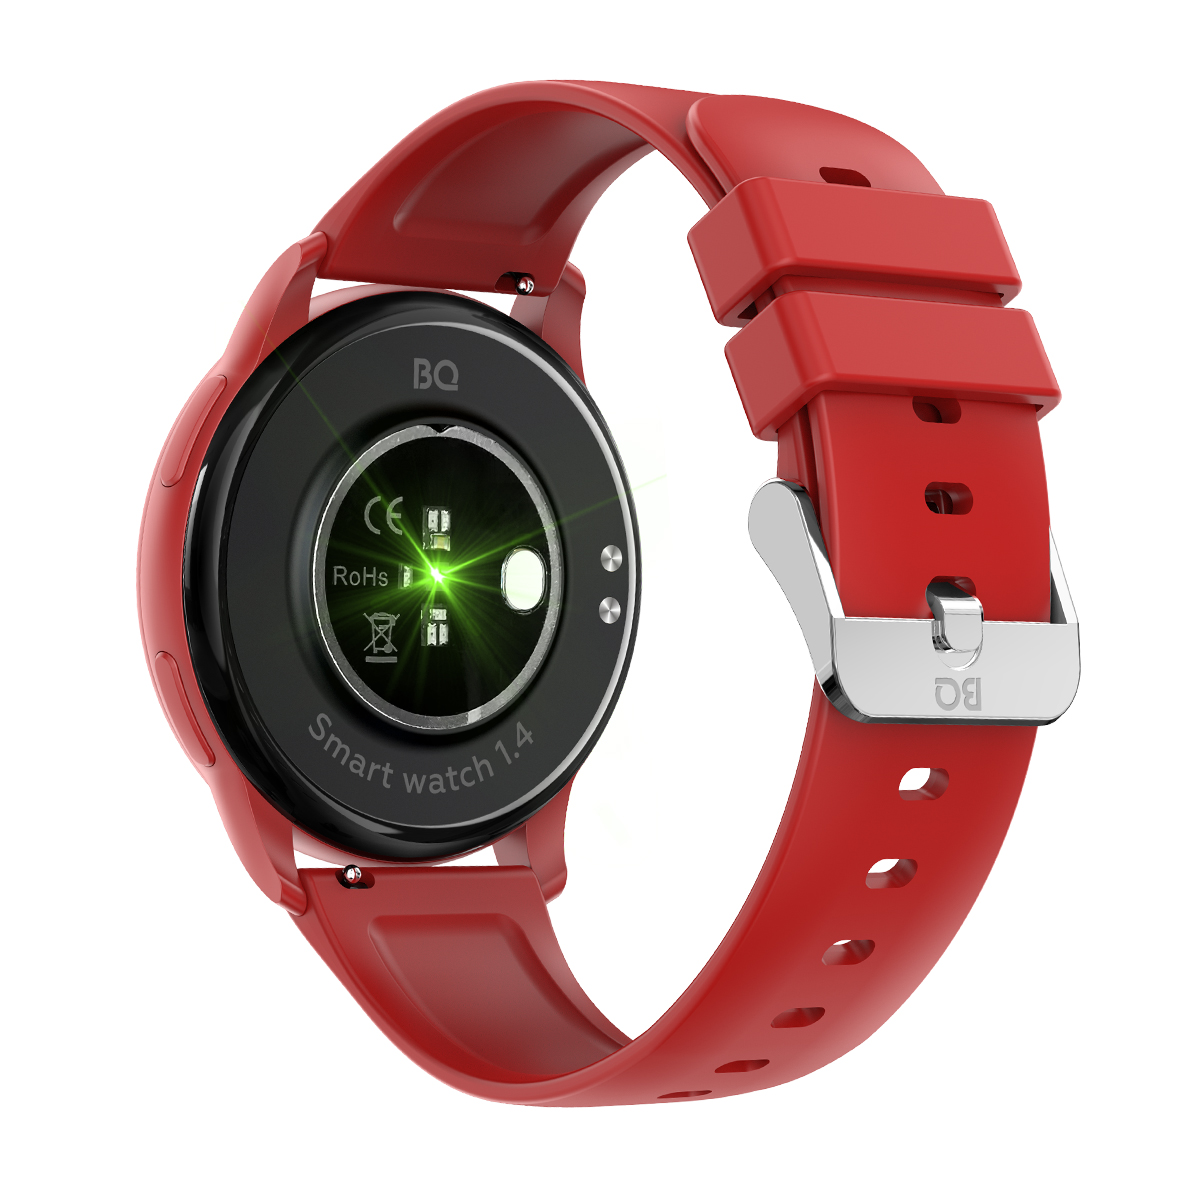 Smart watch 1.4 BQ. Умные часы BQ w001. BQ Smart watch 1.0. Smart watch 1.4 BQ комплектующие. Часы bq watch